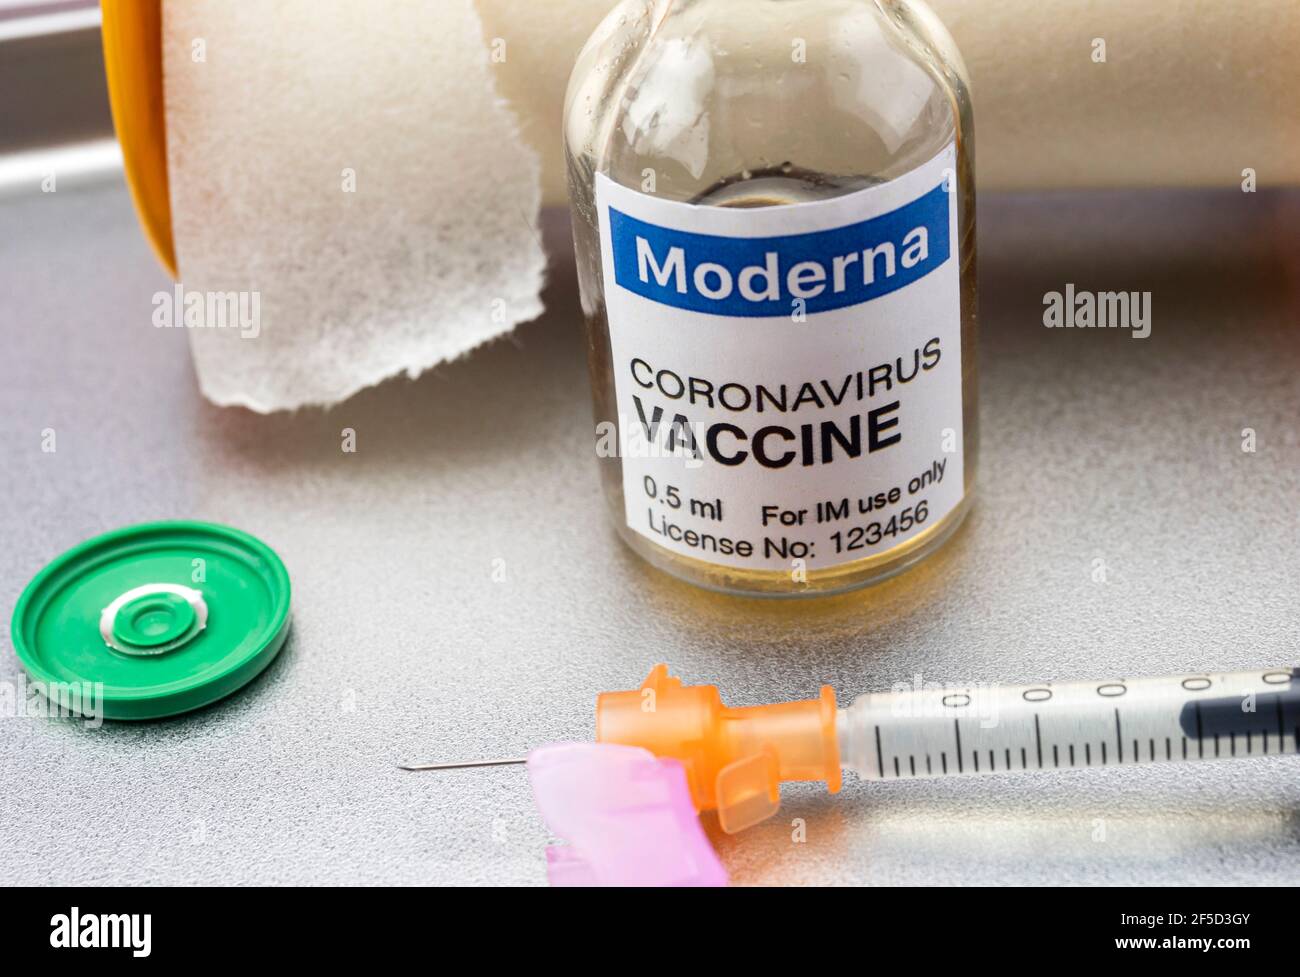 Coronavirus covid-19 vaccine in a hospital, conceptual image Stock Photo